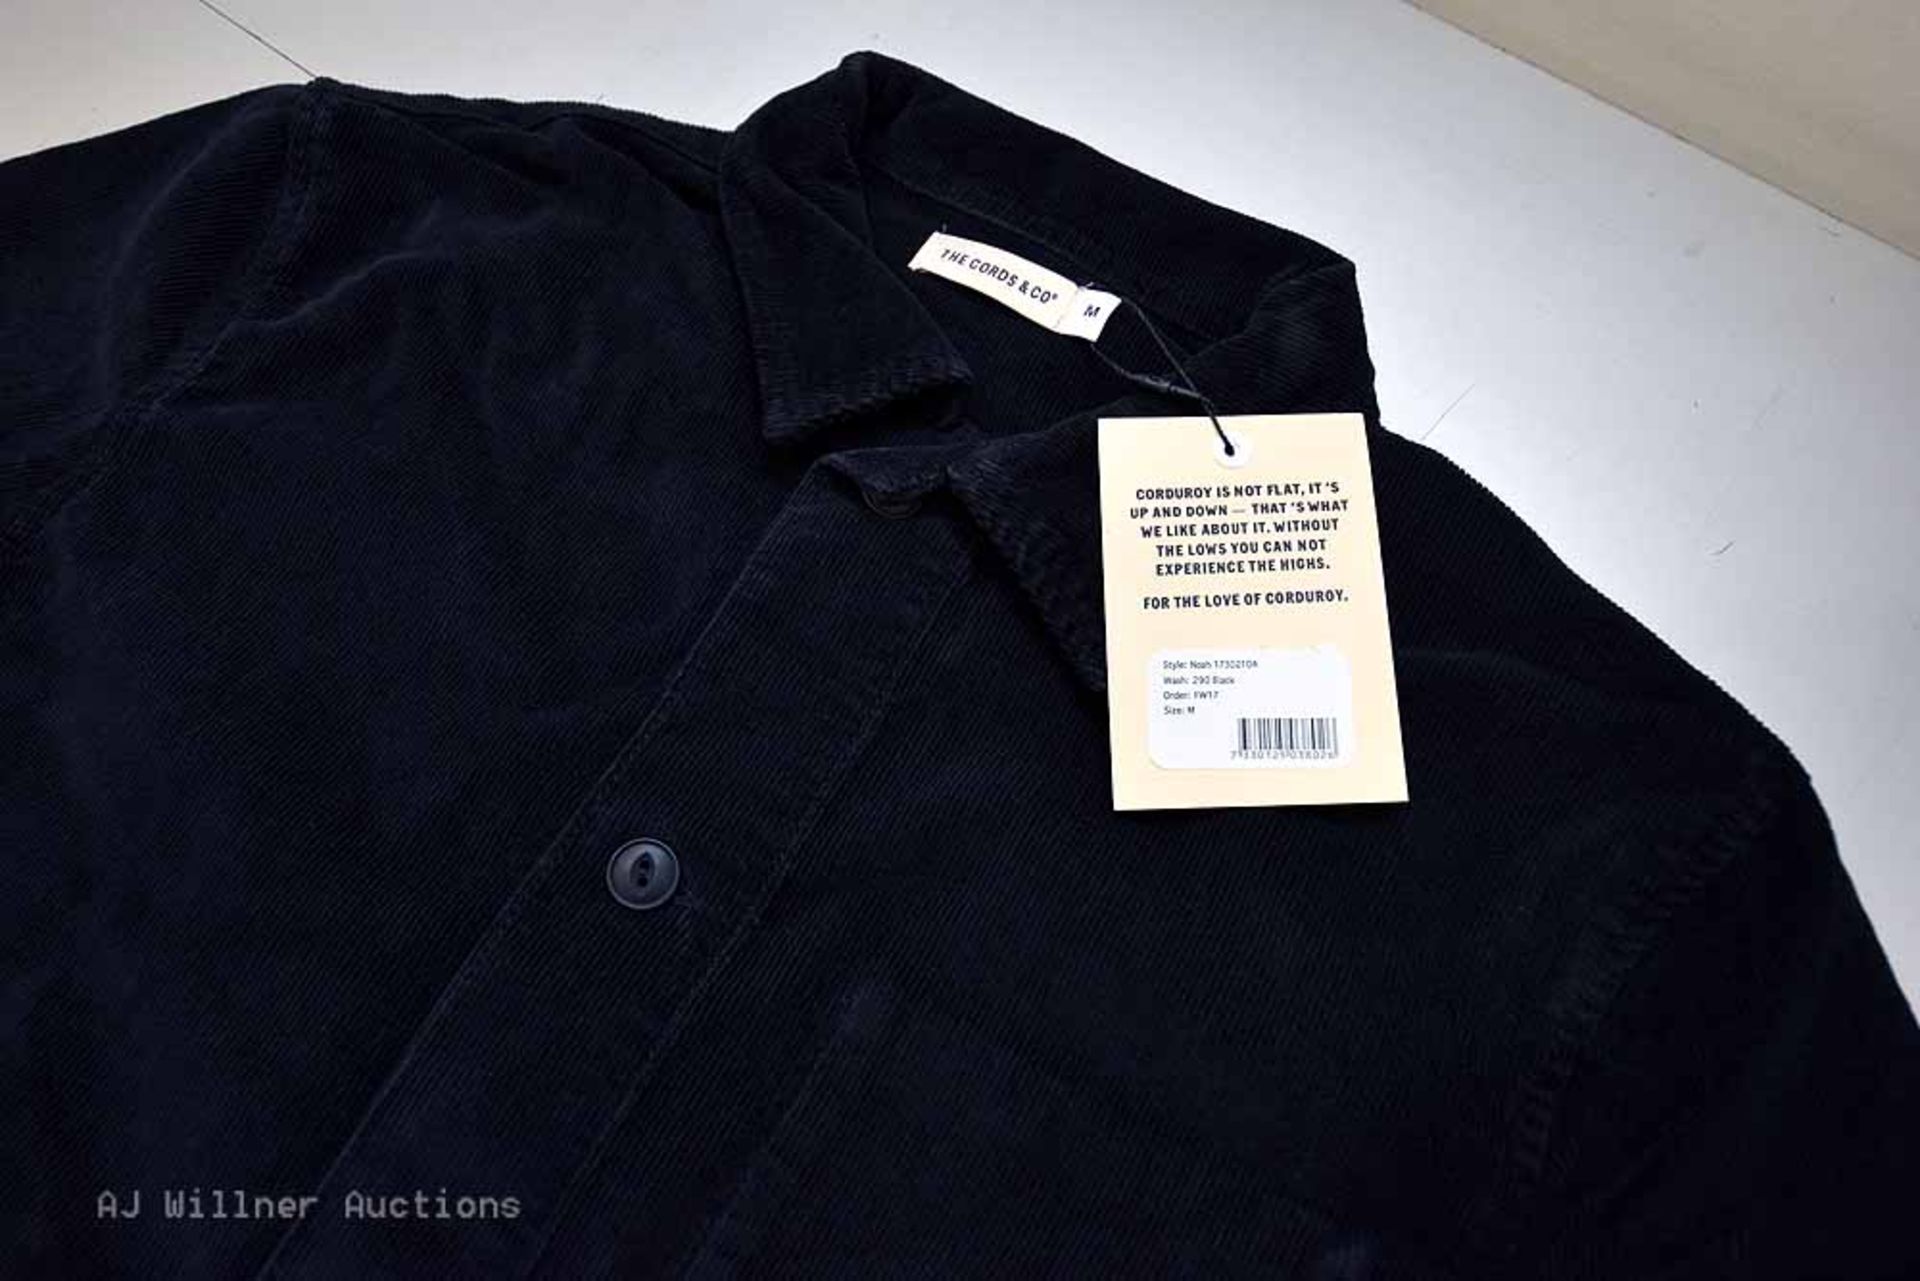 The Cords & Co. "Noah" Style, Mens Collard Long Sleeve Shirt(Black) Small, Medium, Large, X-Large - Image 5 of 5